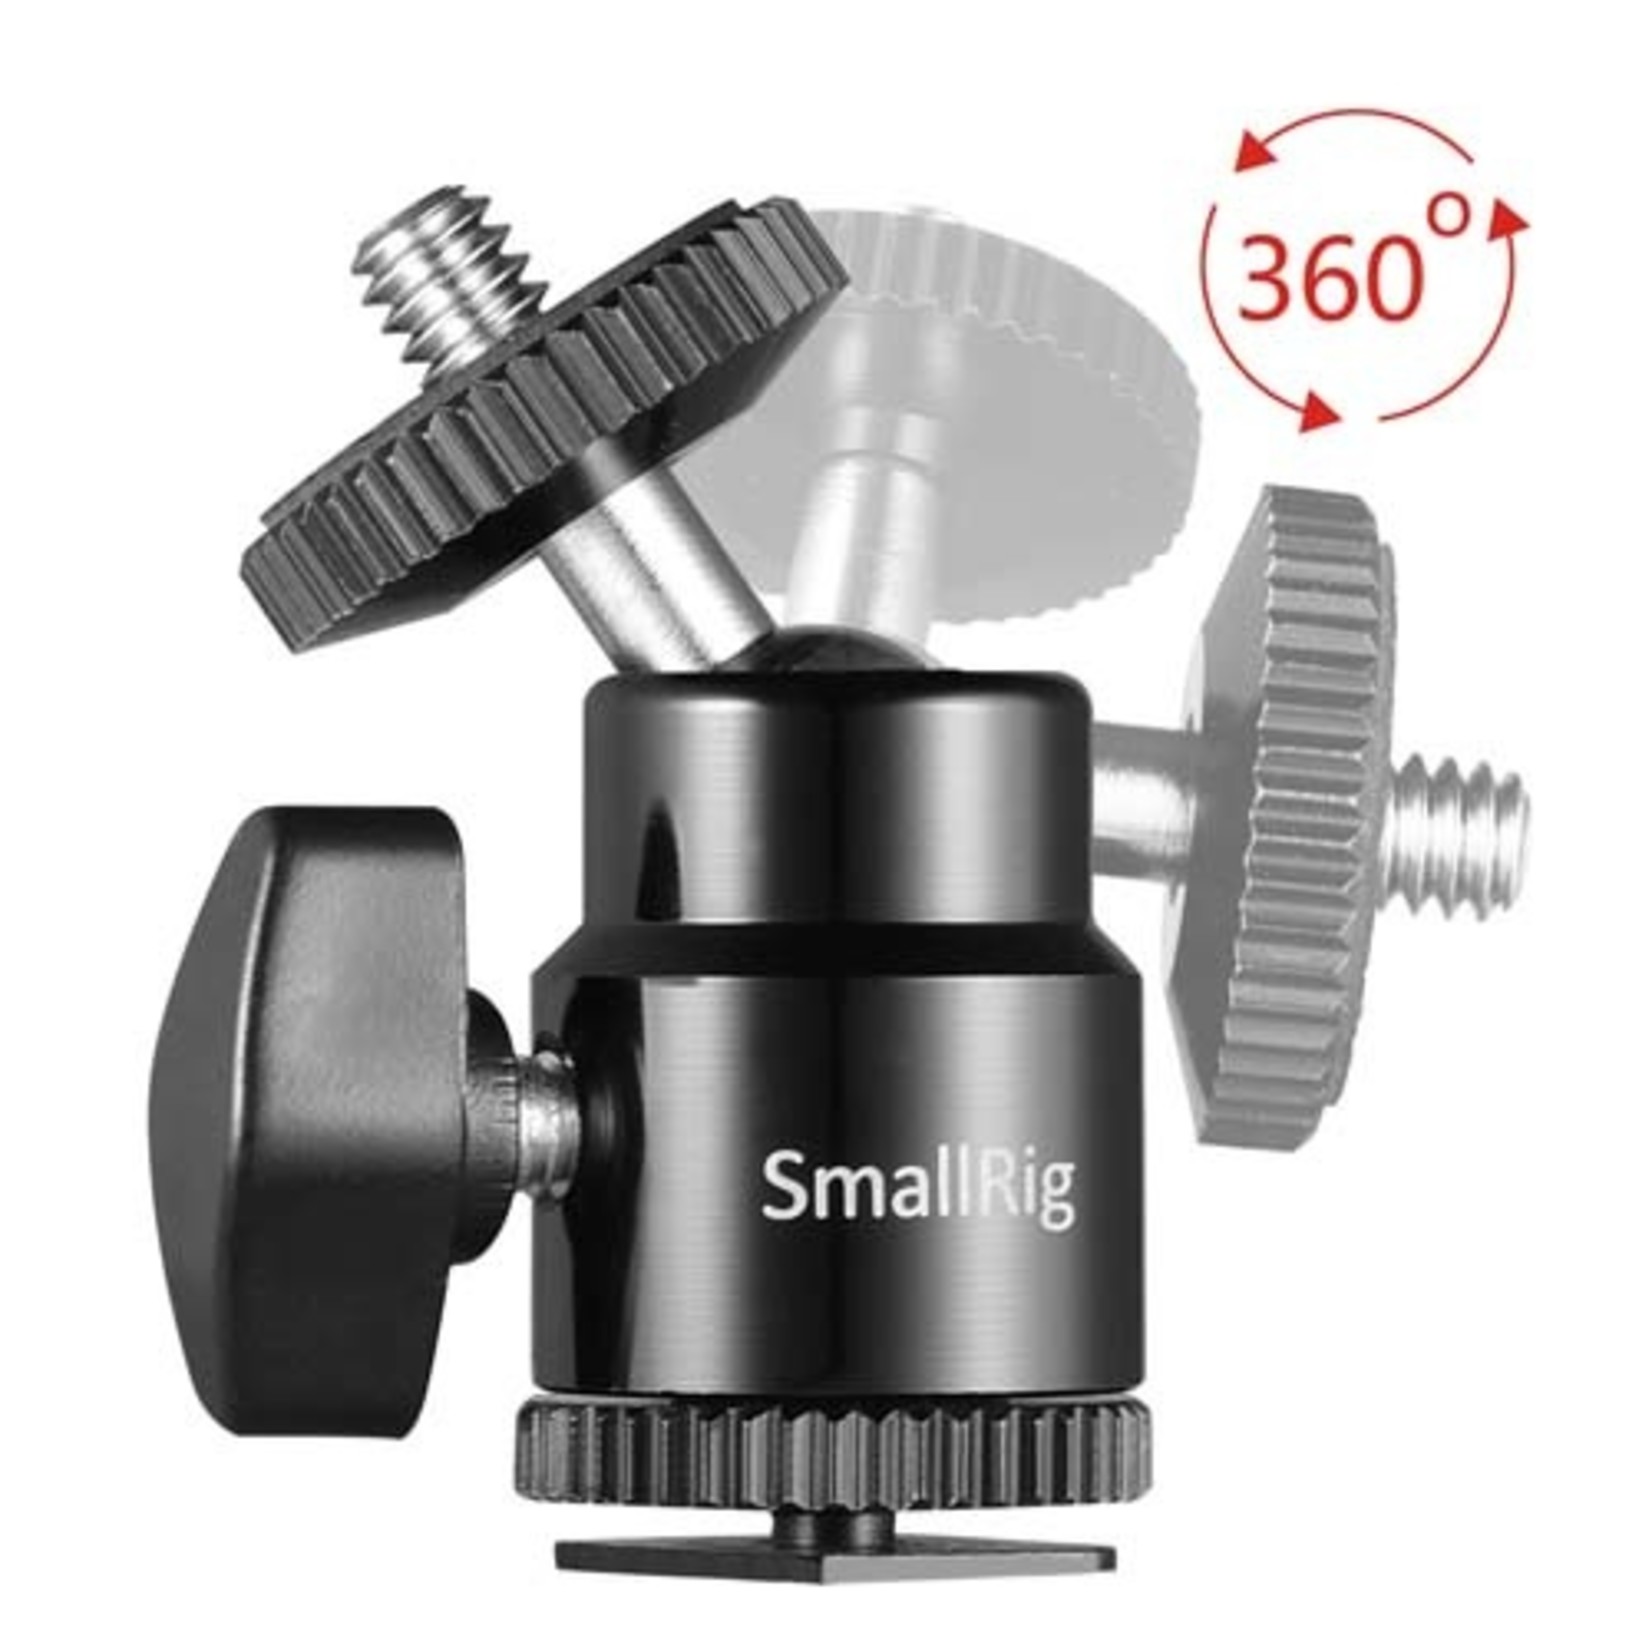 SmallRig SmallRig 2pk 1/4" Camera Hot shoe Mount with Additional 1/4" Screw (2pcs Pack)